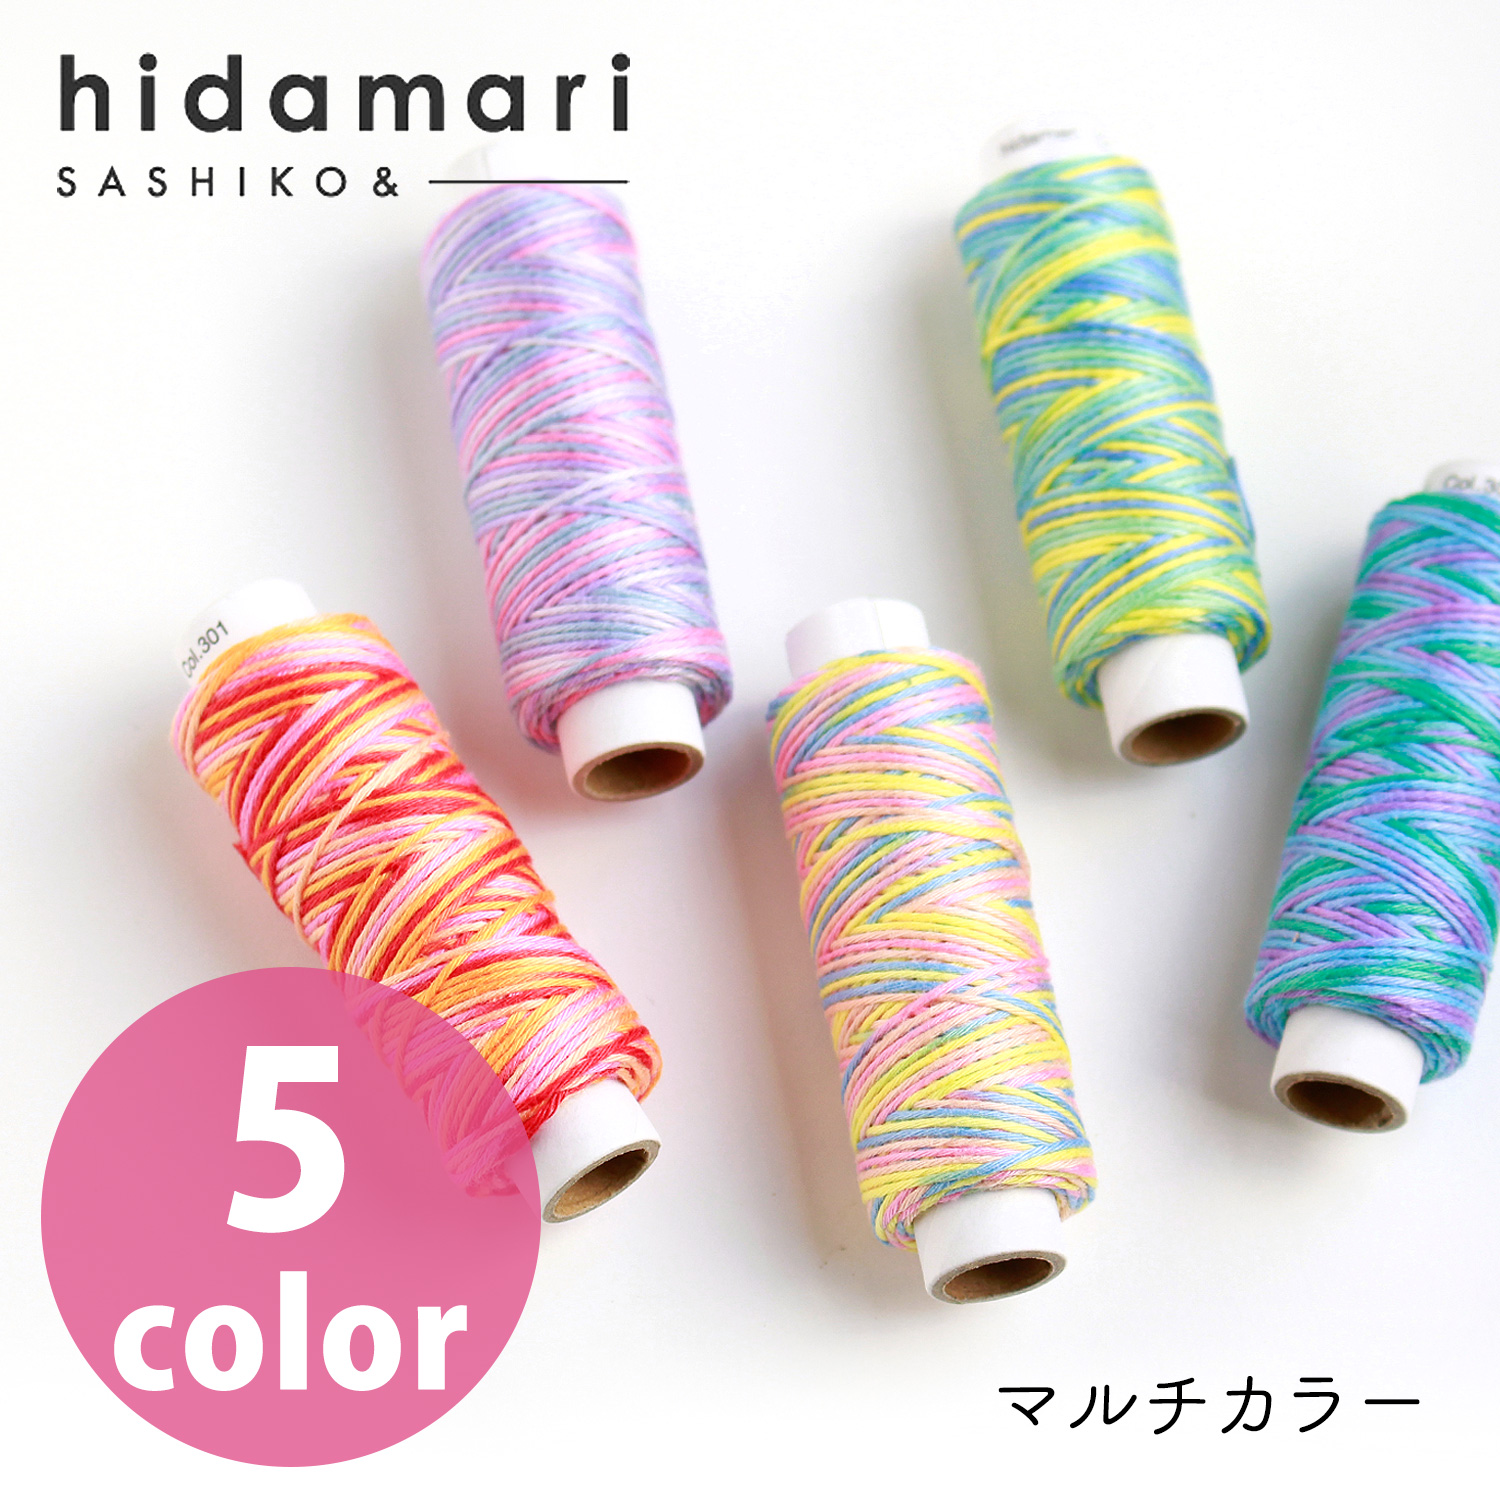 【renewal】 CS122302-301~305 Cosmo Sashiko Thread (Multicolor) - hidamari - (pcs)